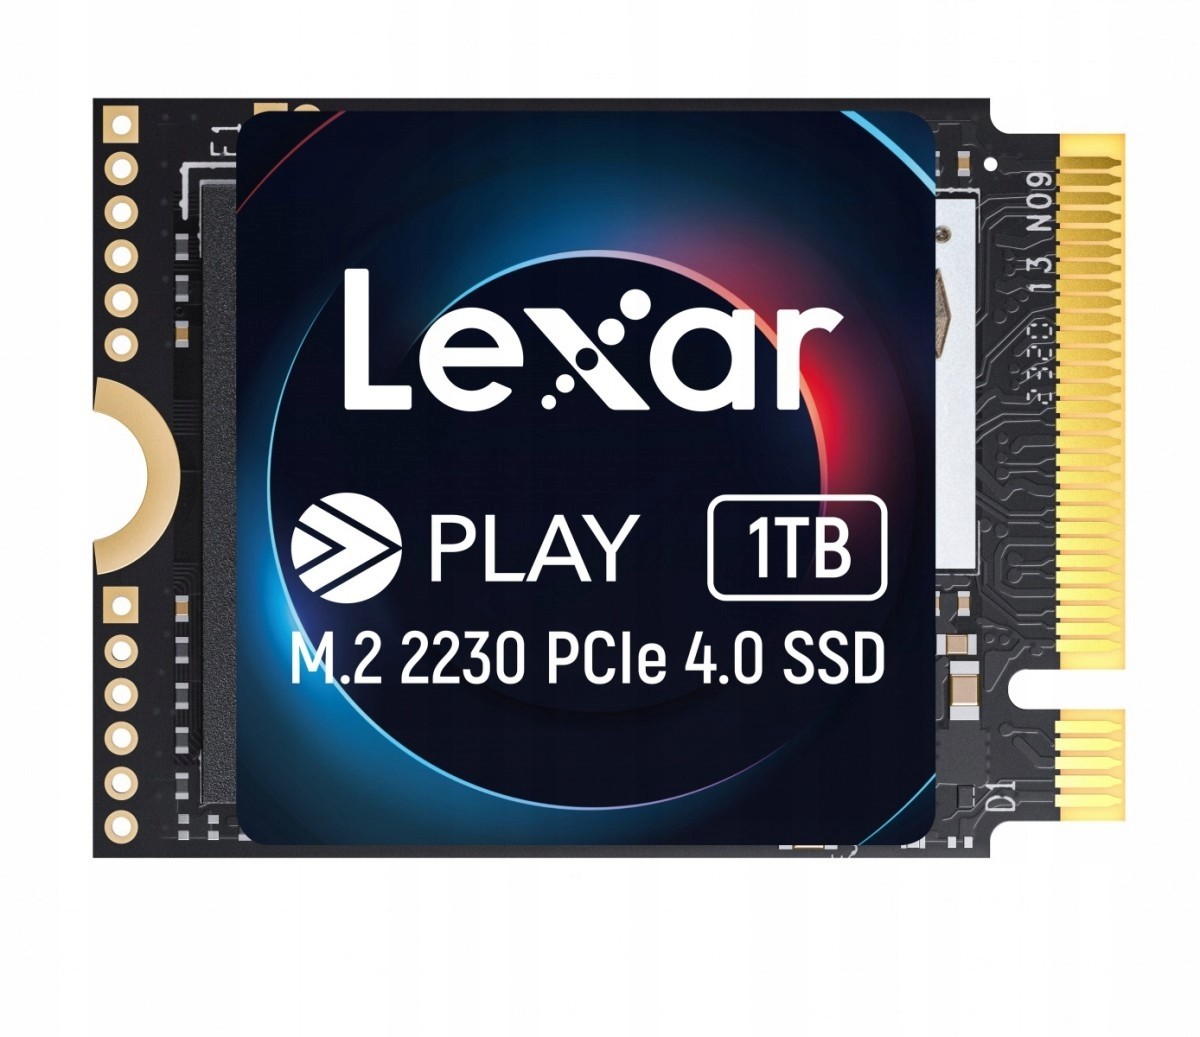 Lexar Ssd disk Play 1TB PCIe4.0 2230 5200/4700MB/s